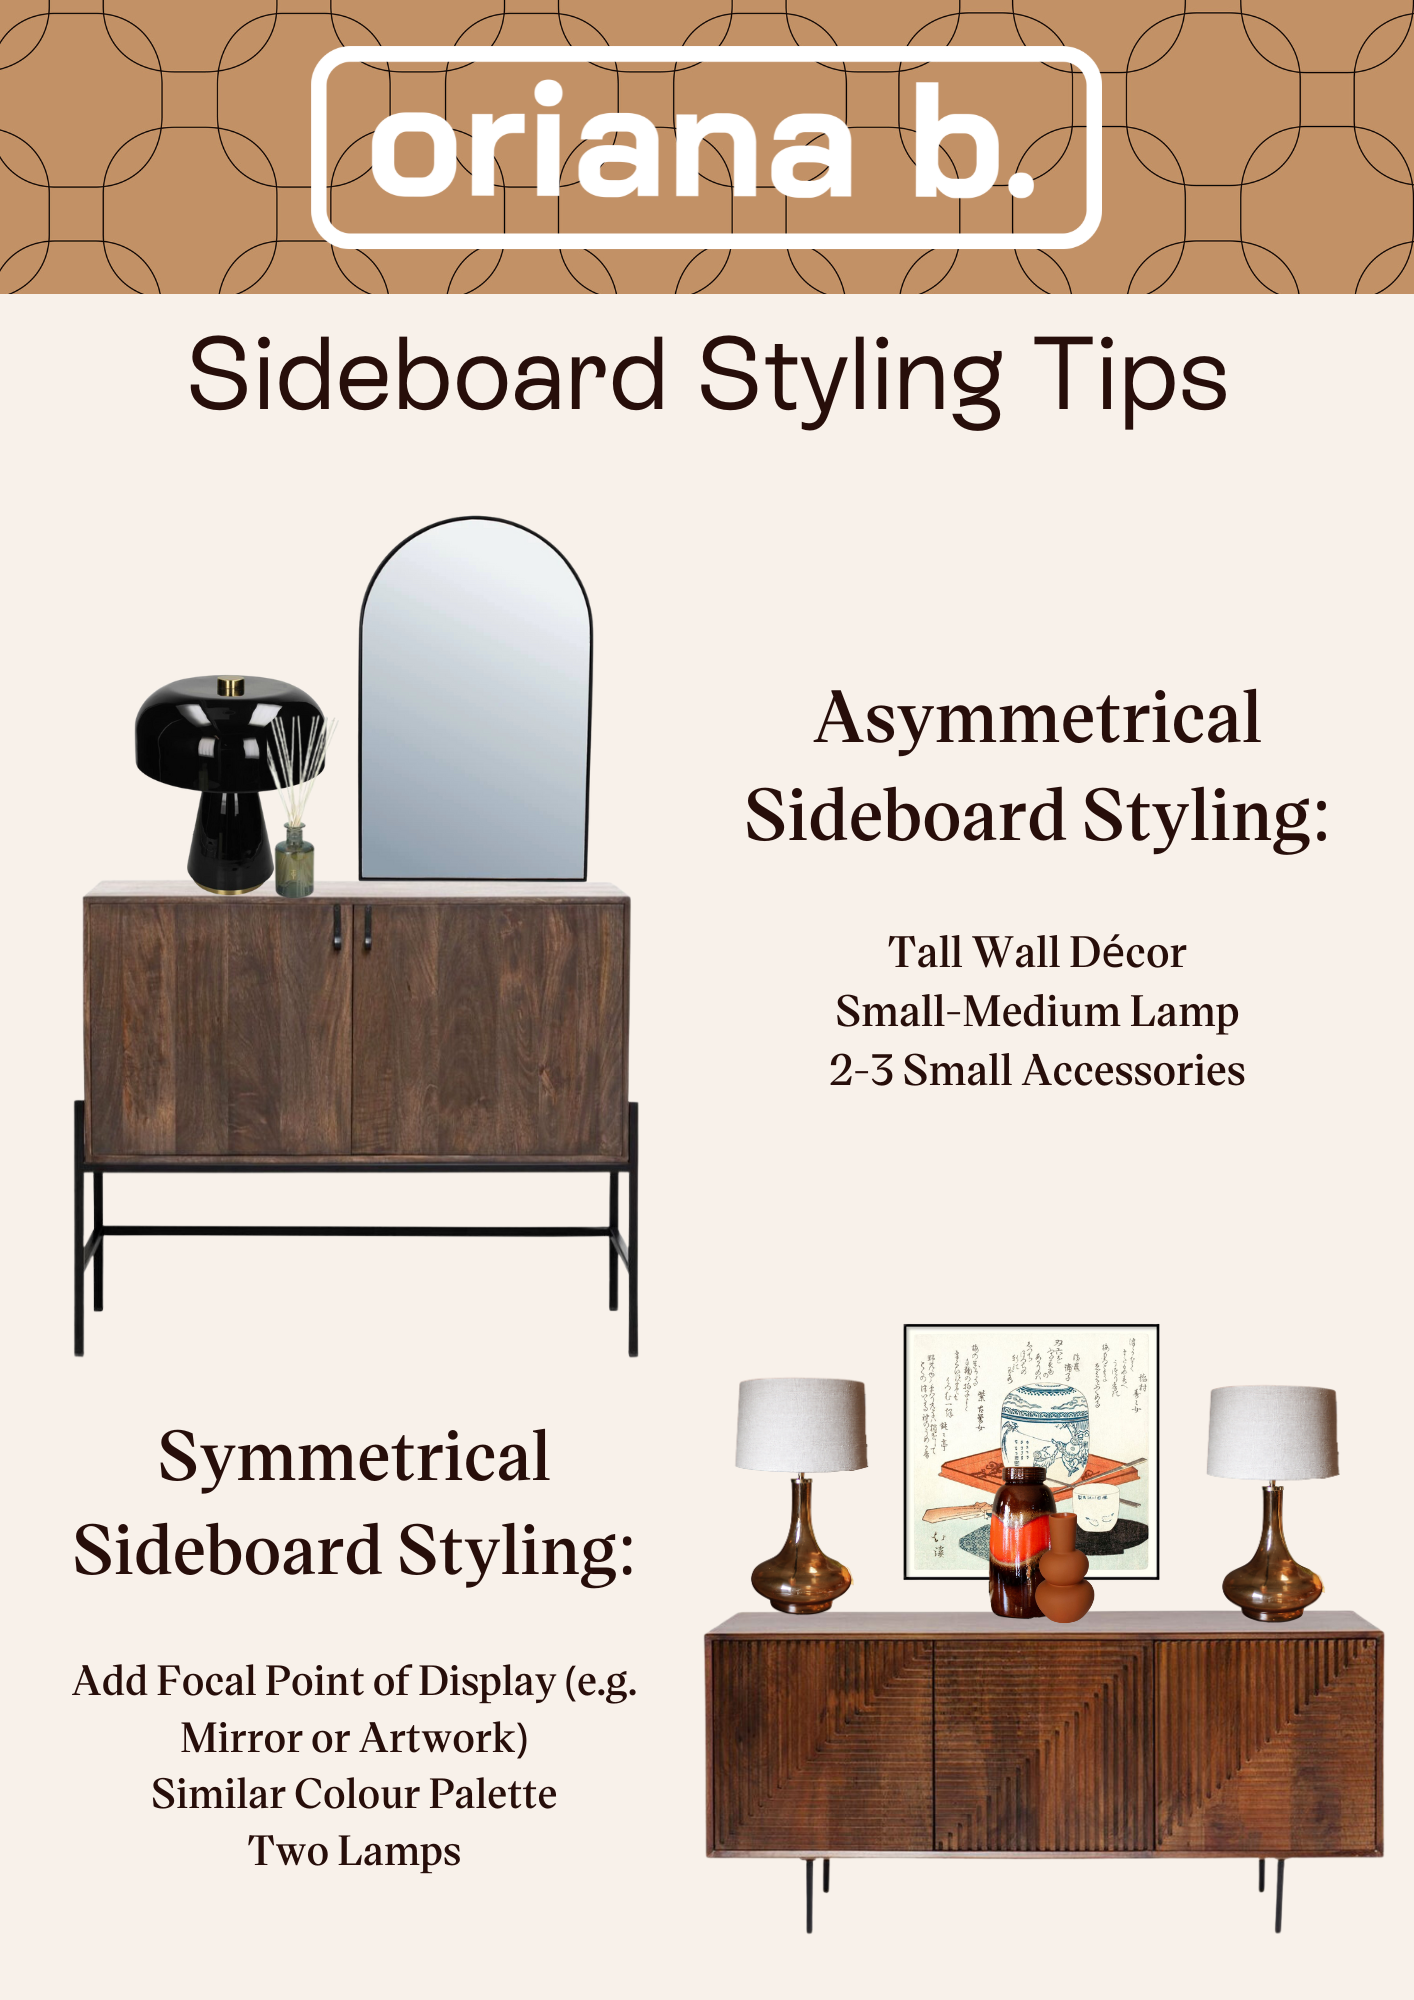 Sideboard Styling Tips | Home & Accessories Shop | Irish Home Shop | Oriana B